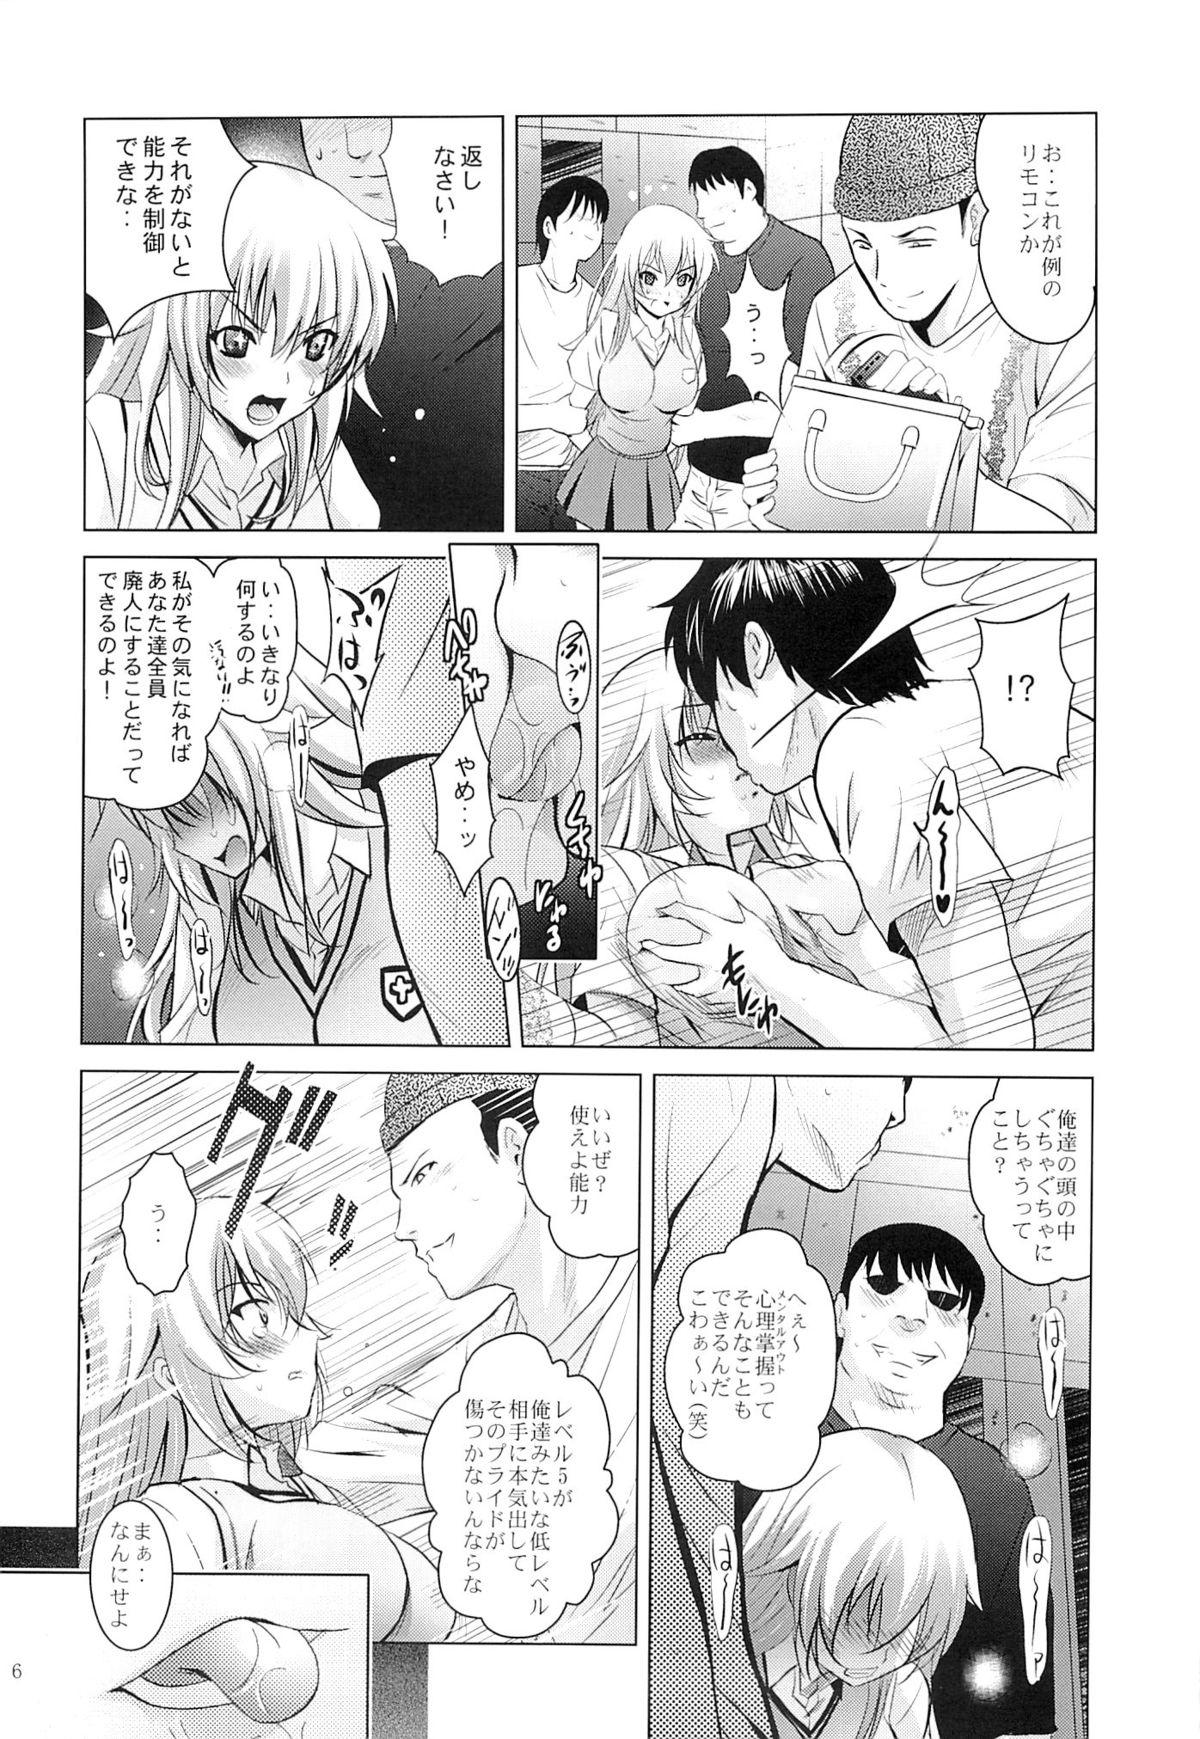 Bailando MOUSOU THEATER 41 - Toaru majutsu no index Blow Job Porn - Page 5